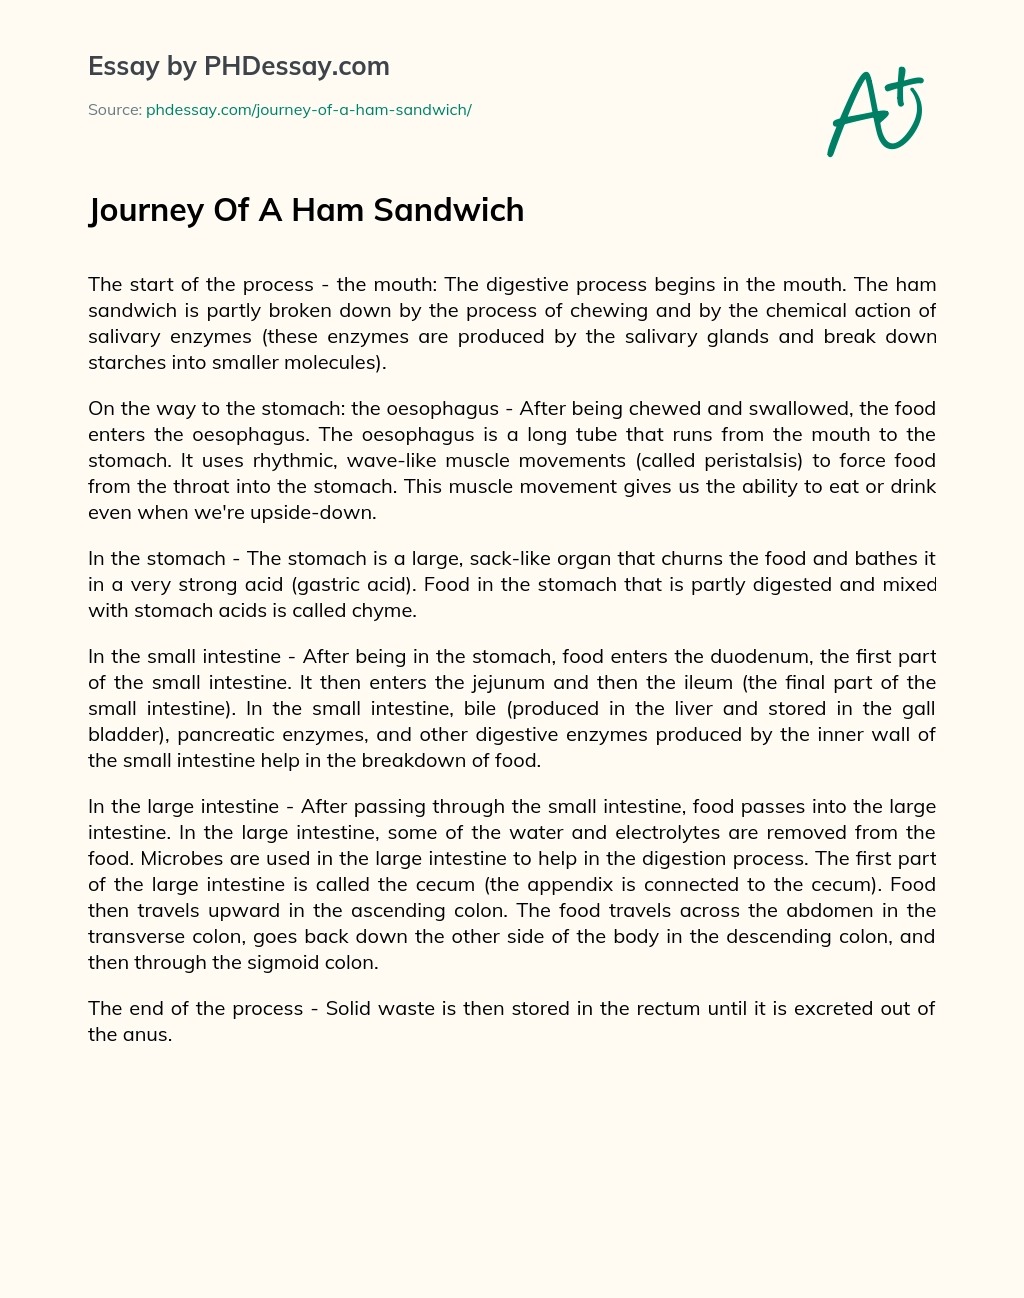 Journey Of A Ham Sandwich essay